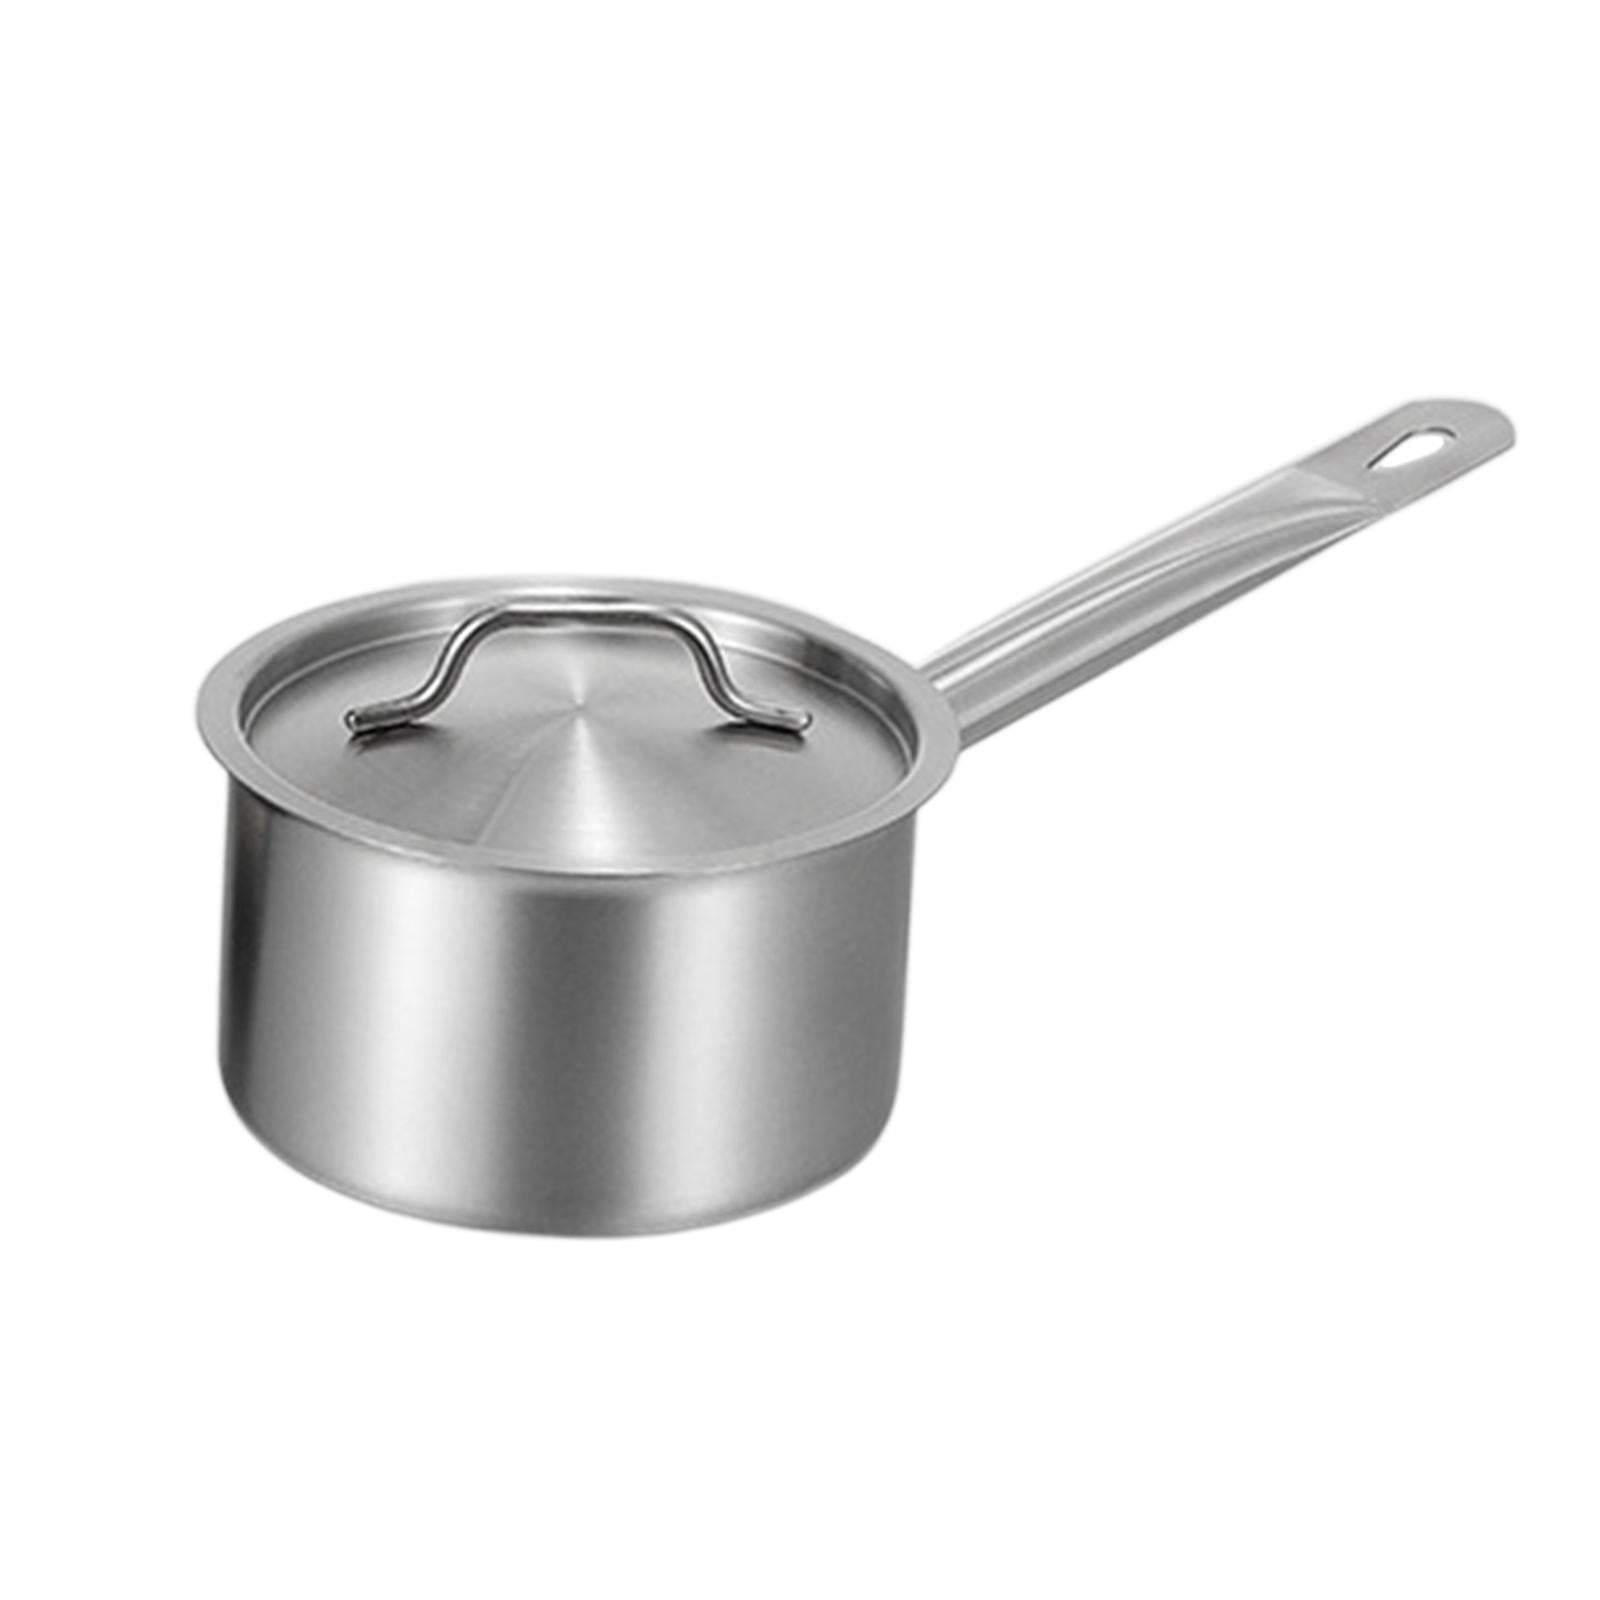 Metal Portable saucepan Sauce Pan Reusable Small Sauce Pan for Home Cooking